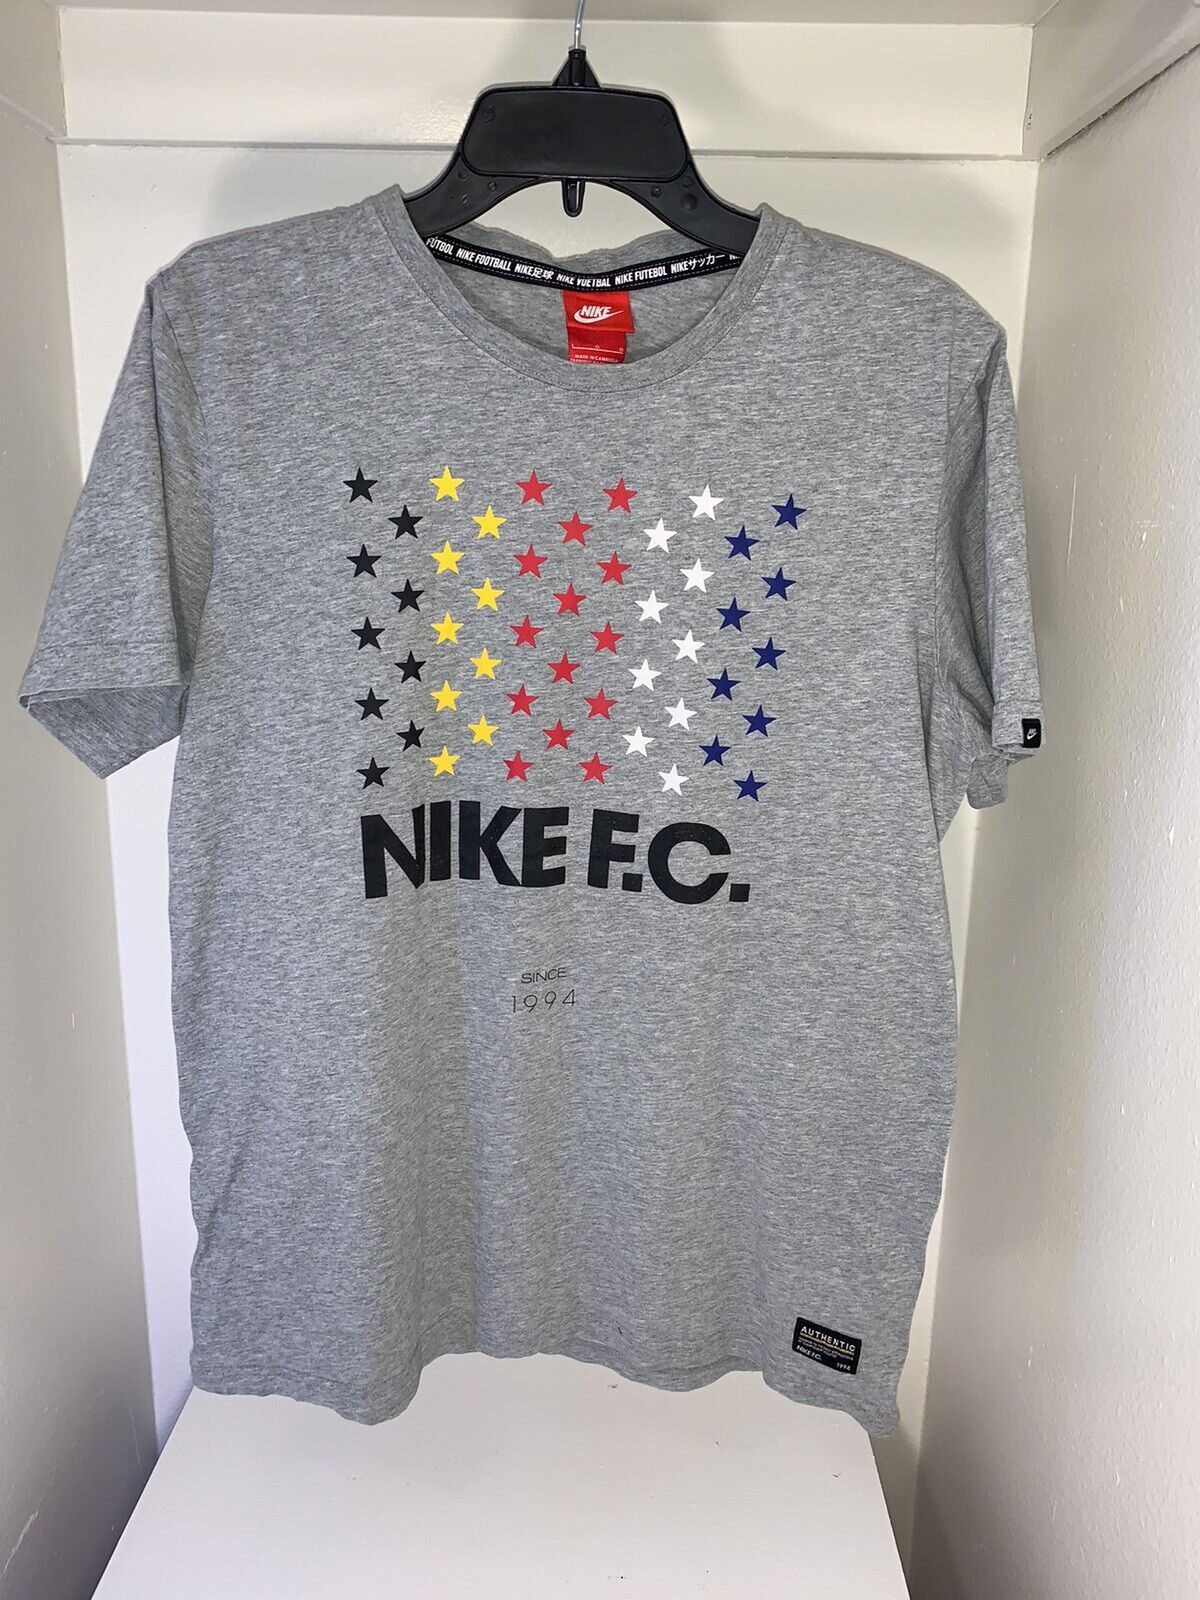 nike fc 1994 t shirt - image 1